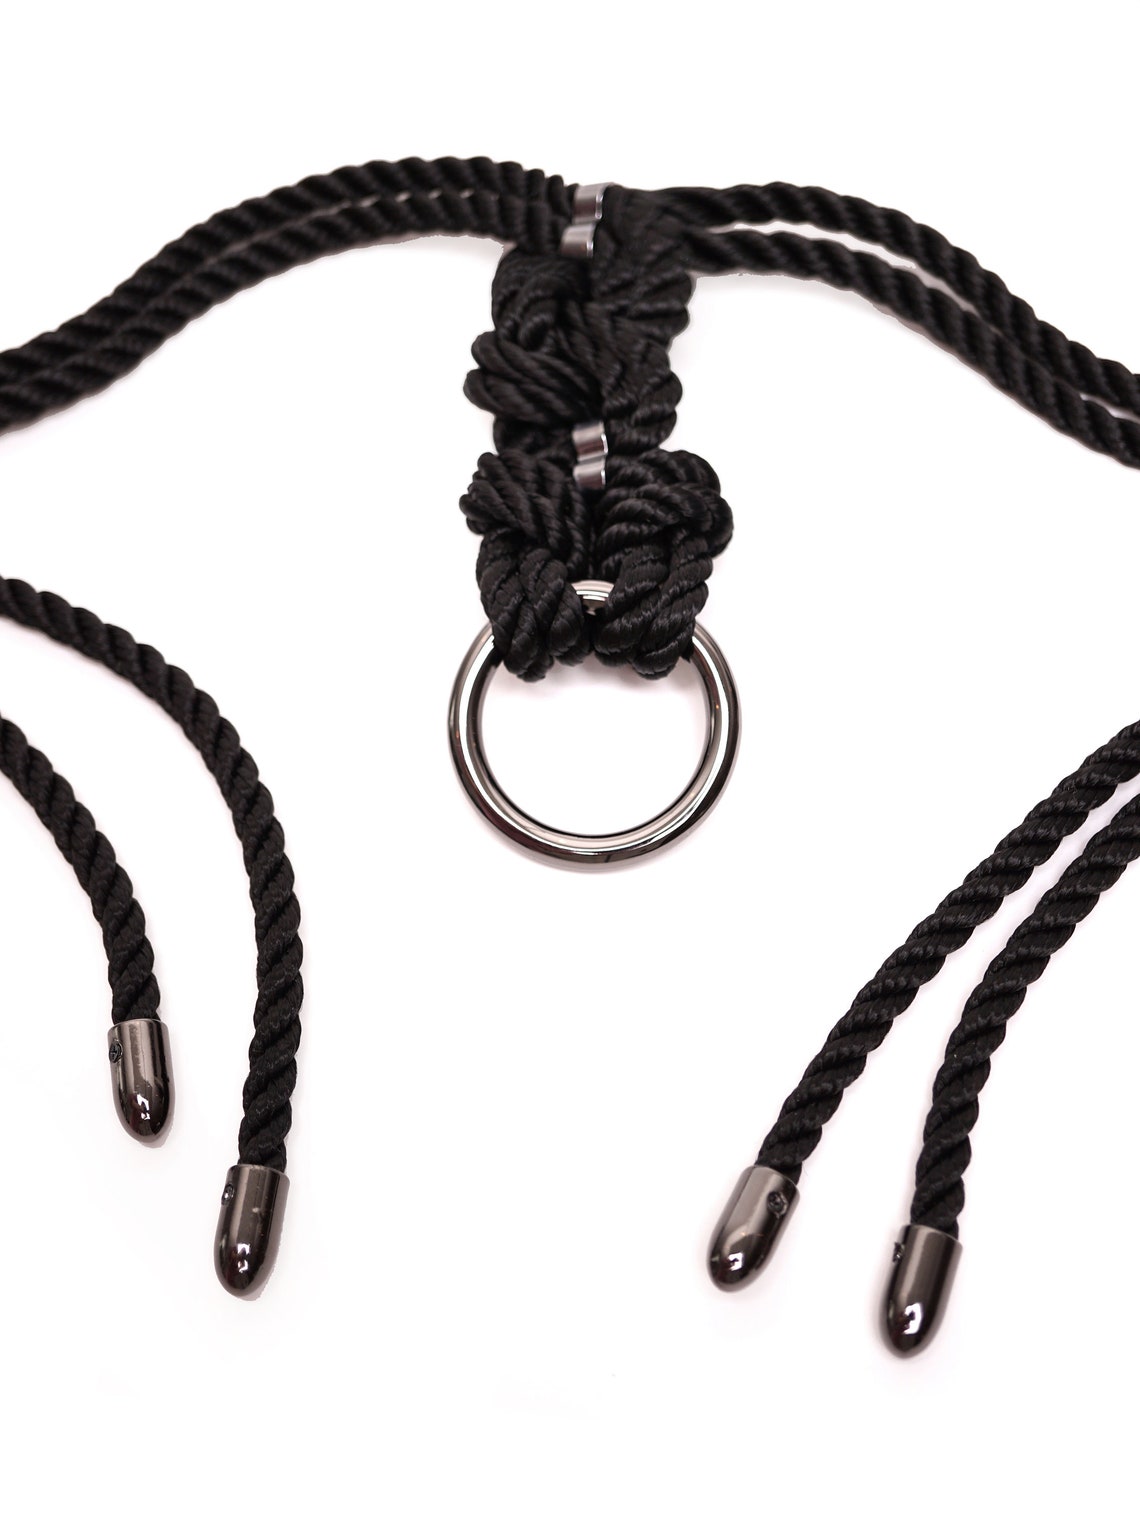 SELF-TIE Shibari Rope Bondage Torso Harness in Black | Etsy